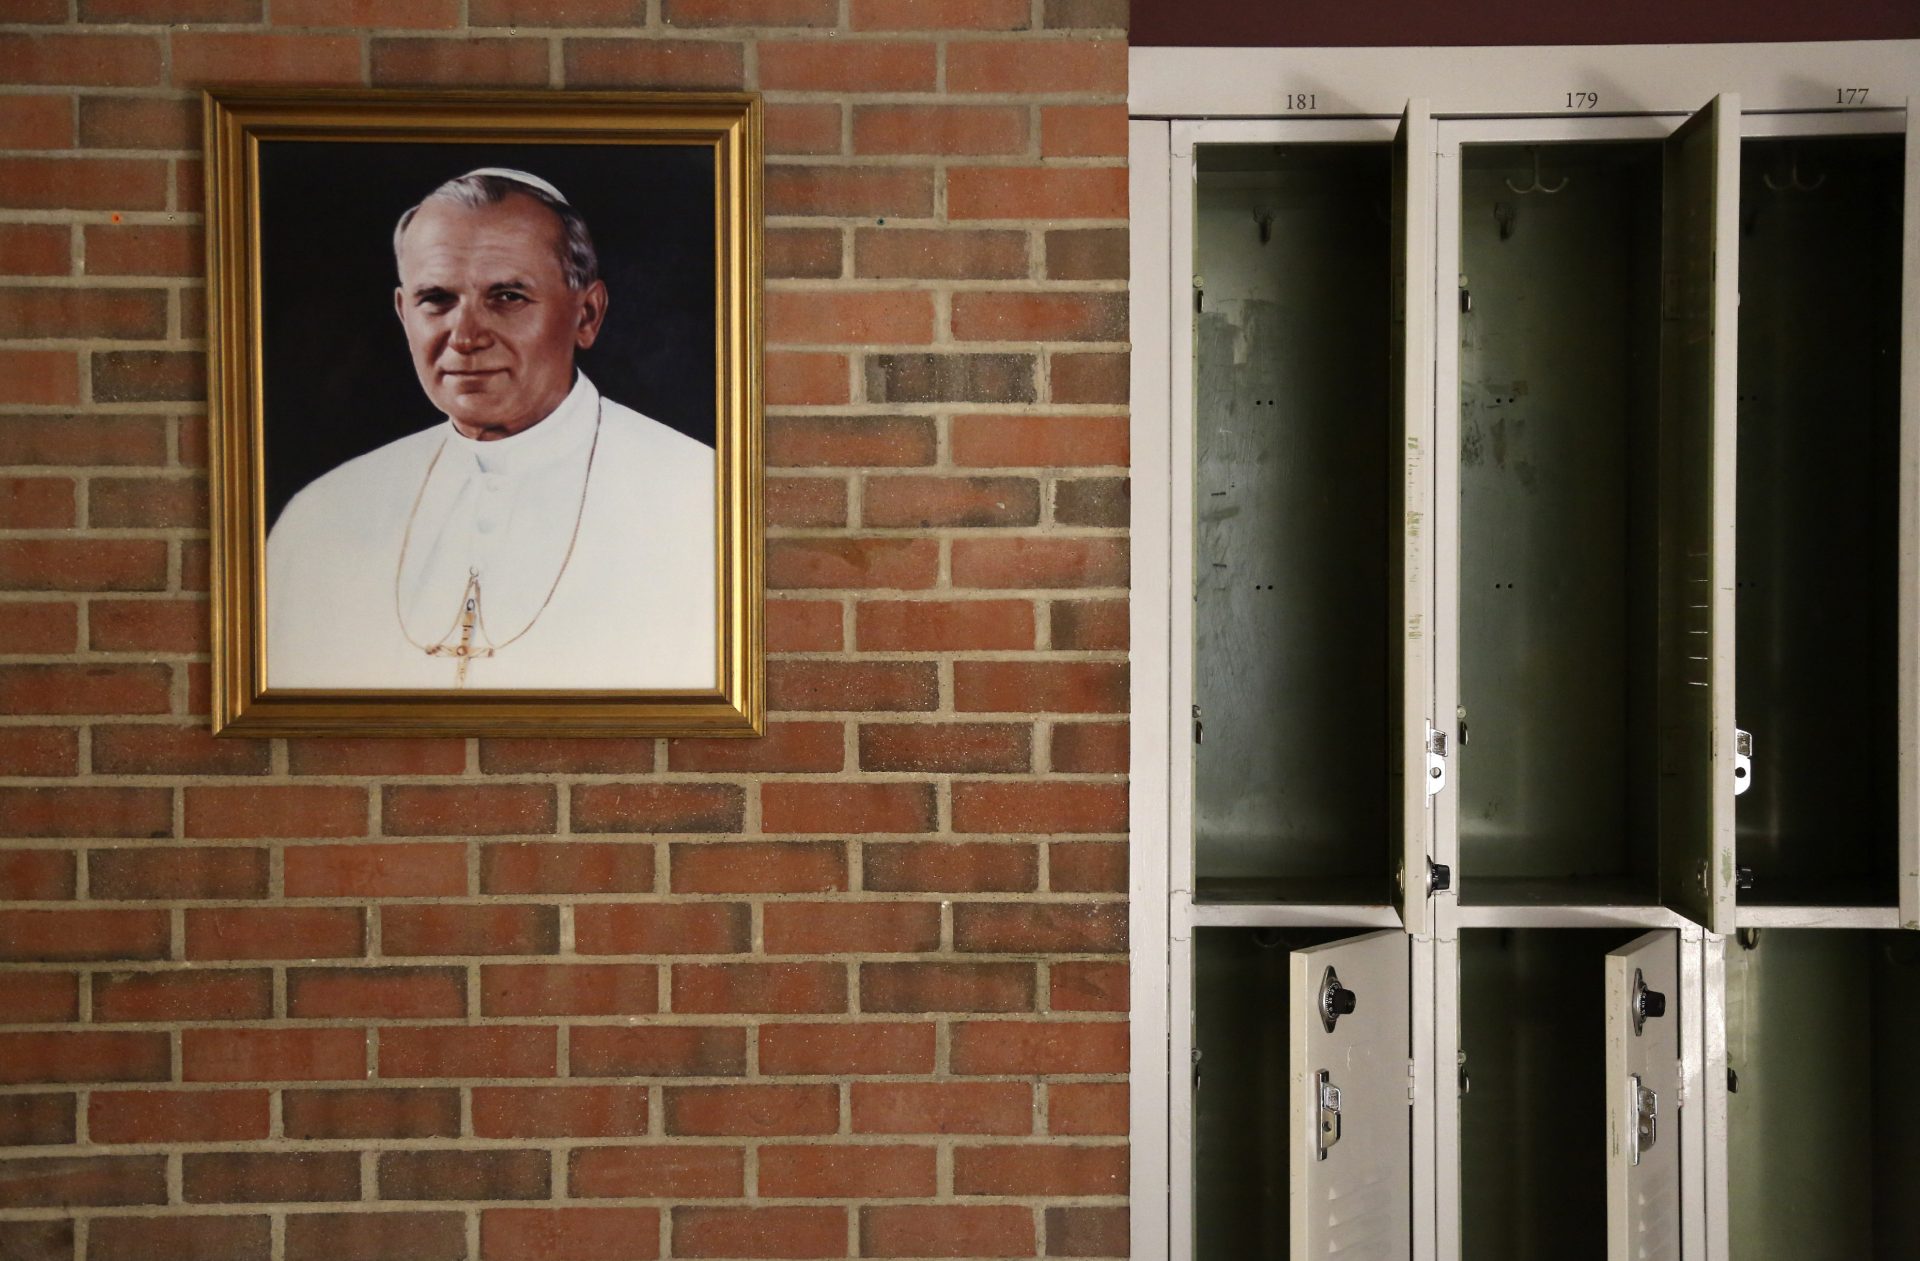 A portrait of St. John Paul II hangs beside a row of empty lockers in the main hallway of Quigley Catholic High School in Baden, Pa., Monday, June 8, 2020.